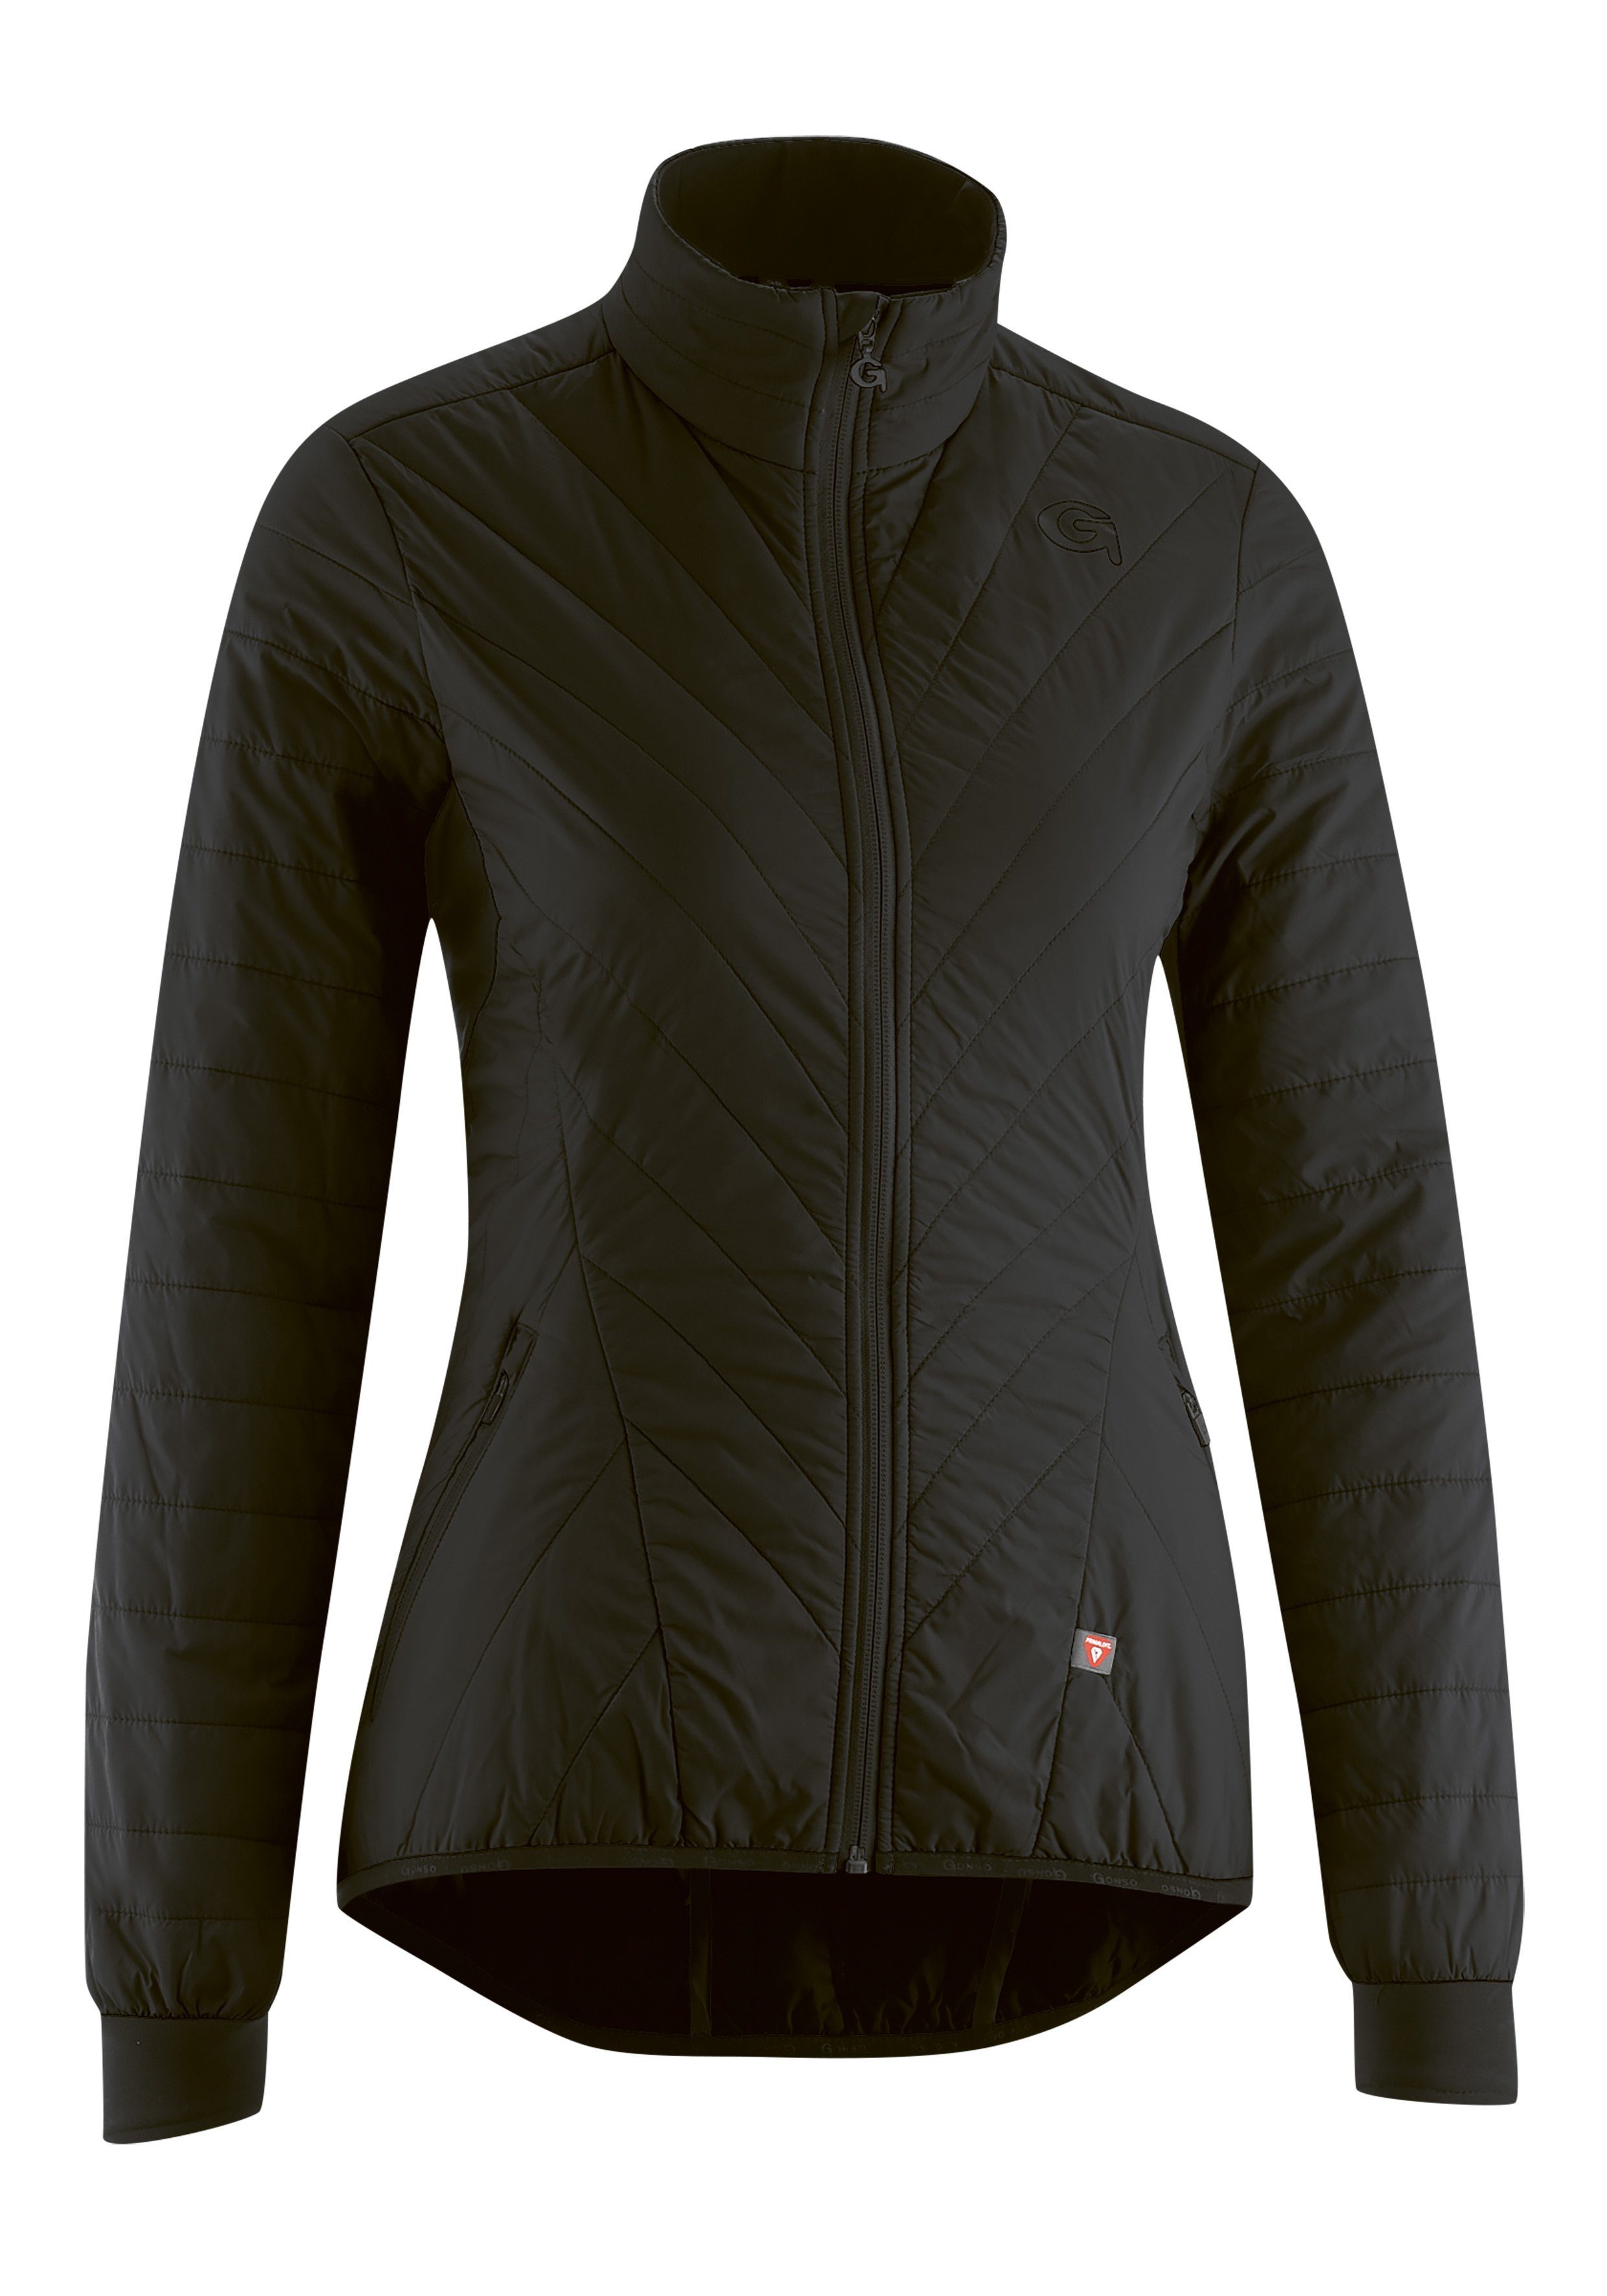 Gonso atmungsaktiv Teixeira winddicht Primaloft-Jacke, Fahrradjacke warm, Damen und schwarz